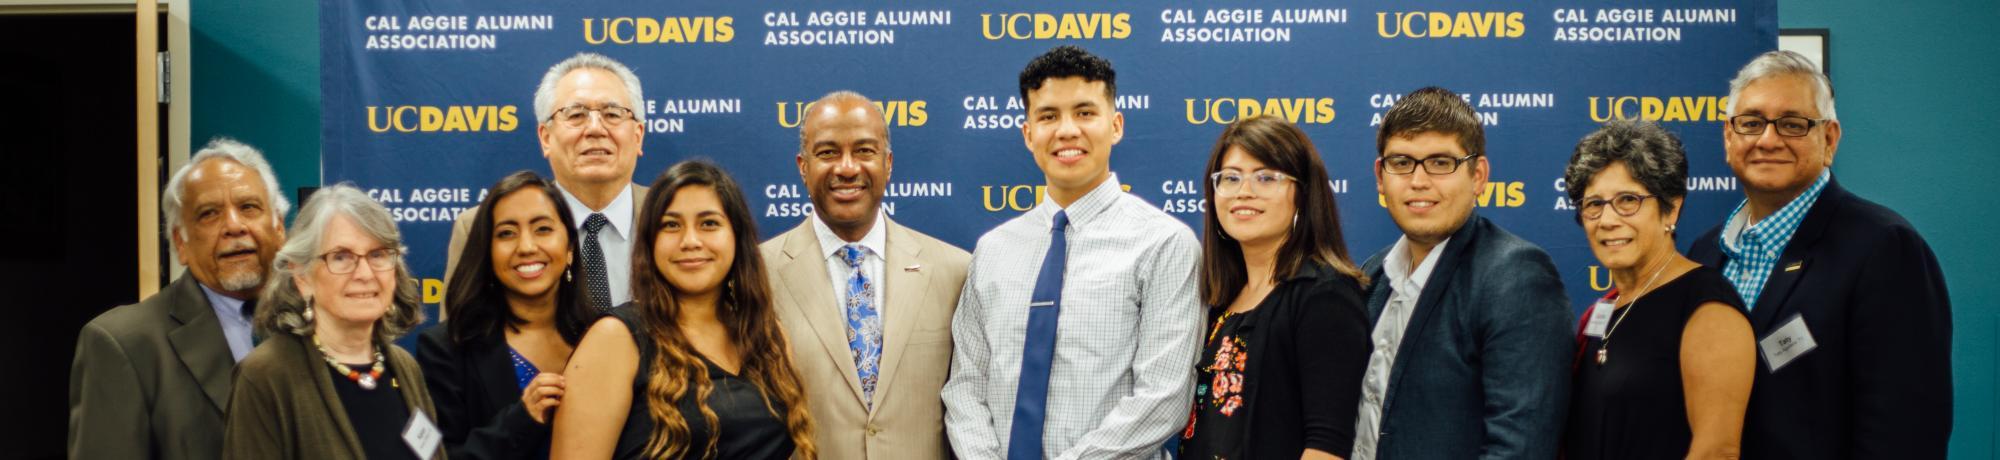 UC Davis Chicanx Latinx Alumni Association Members with UC Davis Chancellor Gary May and scholarship recipients